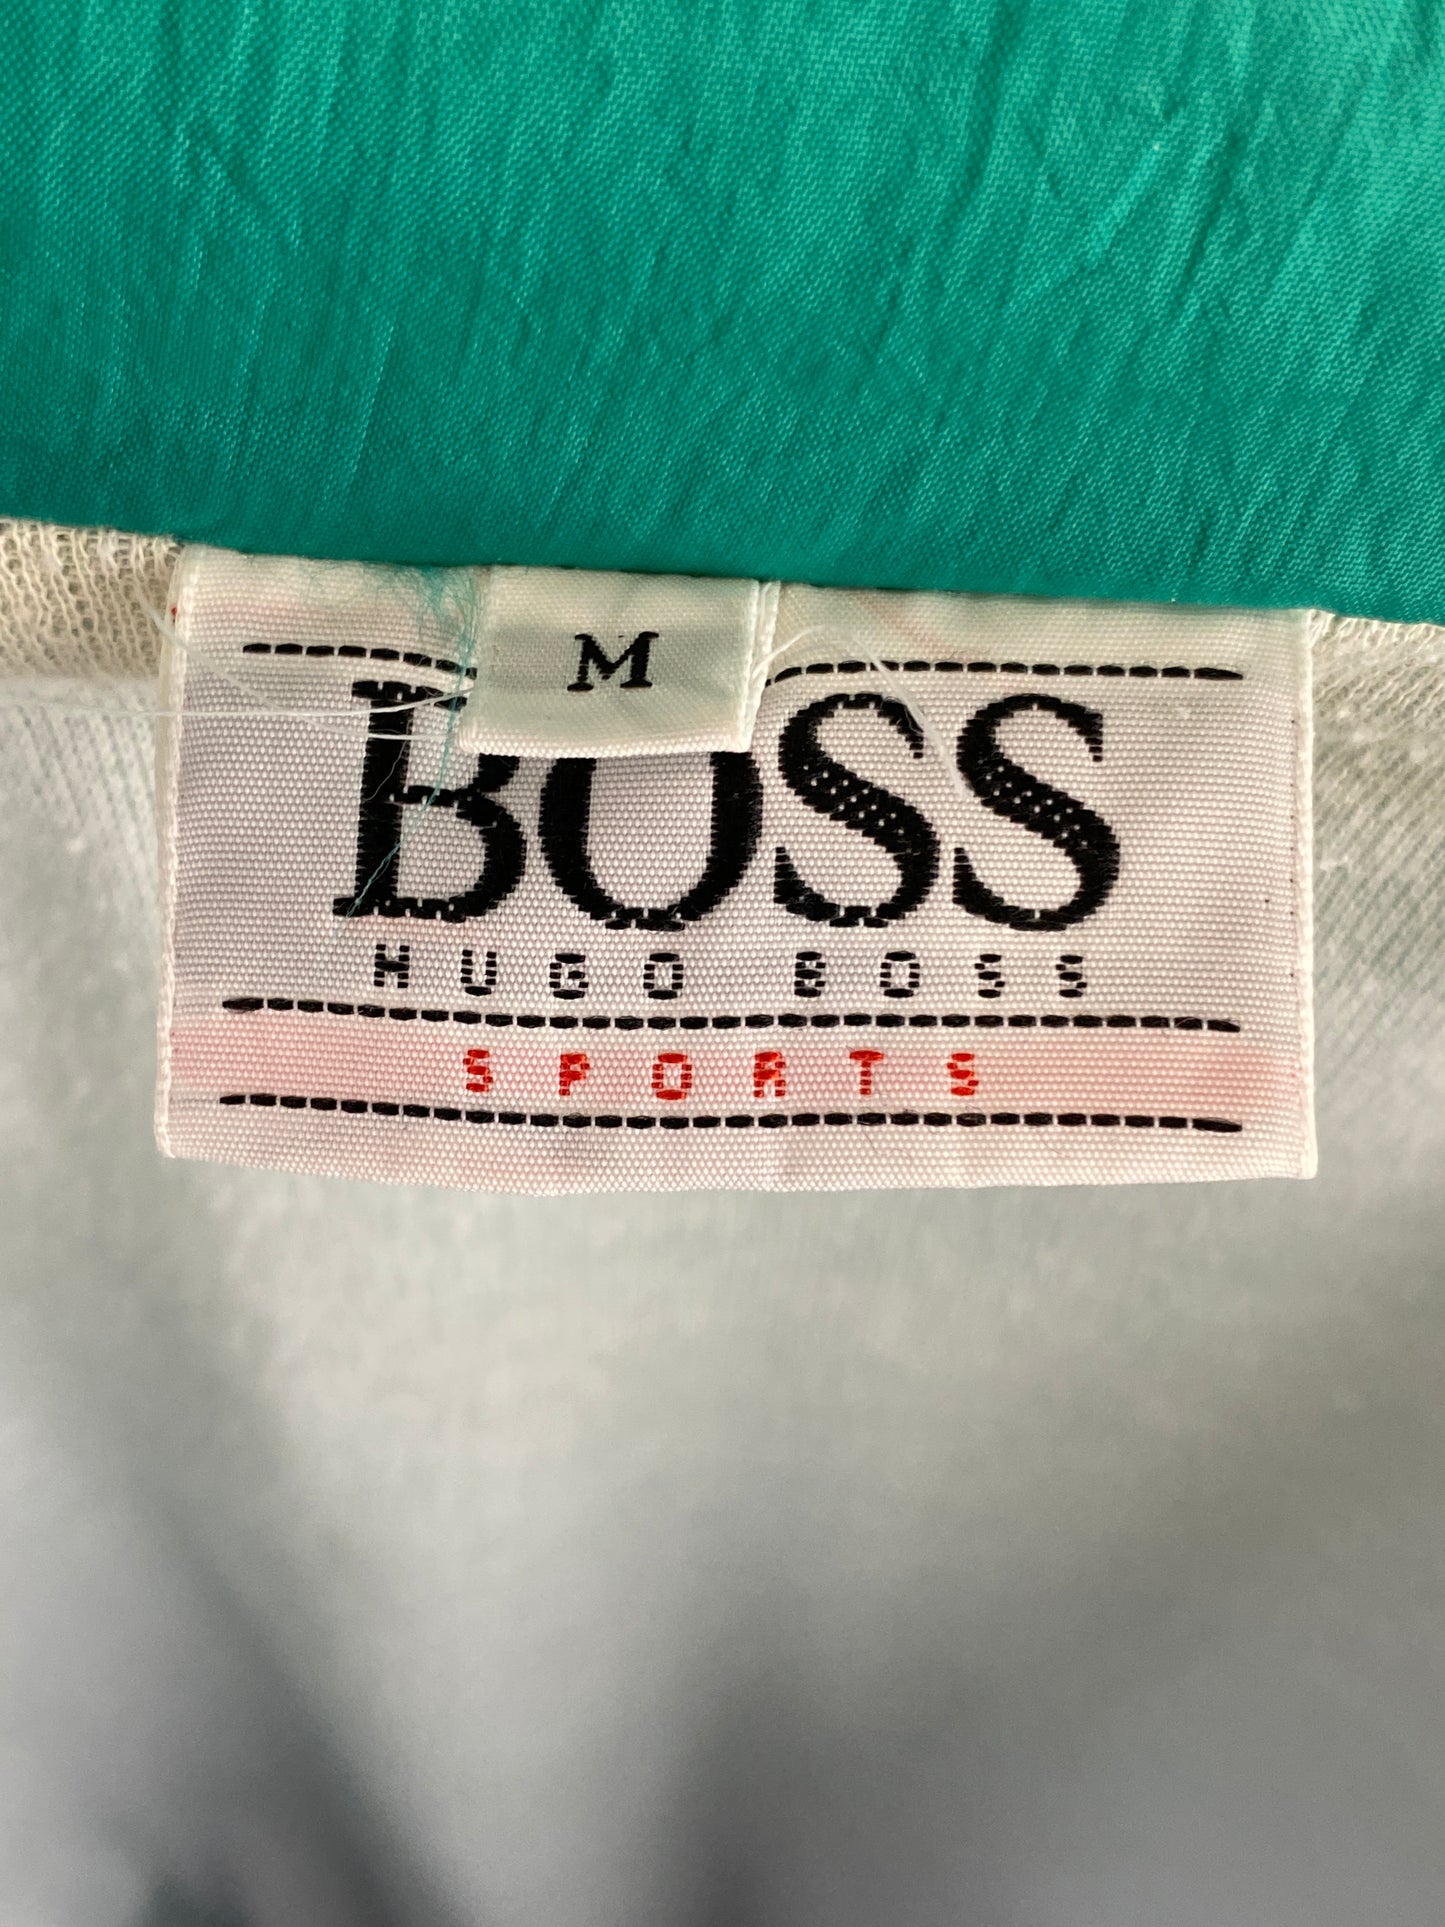 90s Hugo Boss Sport Vintage Men's Windbreaker Jacket - M Blue & Green Nylon